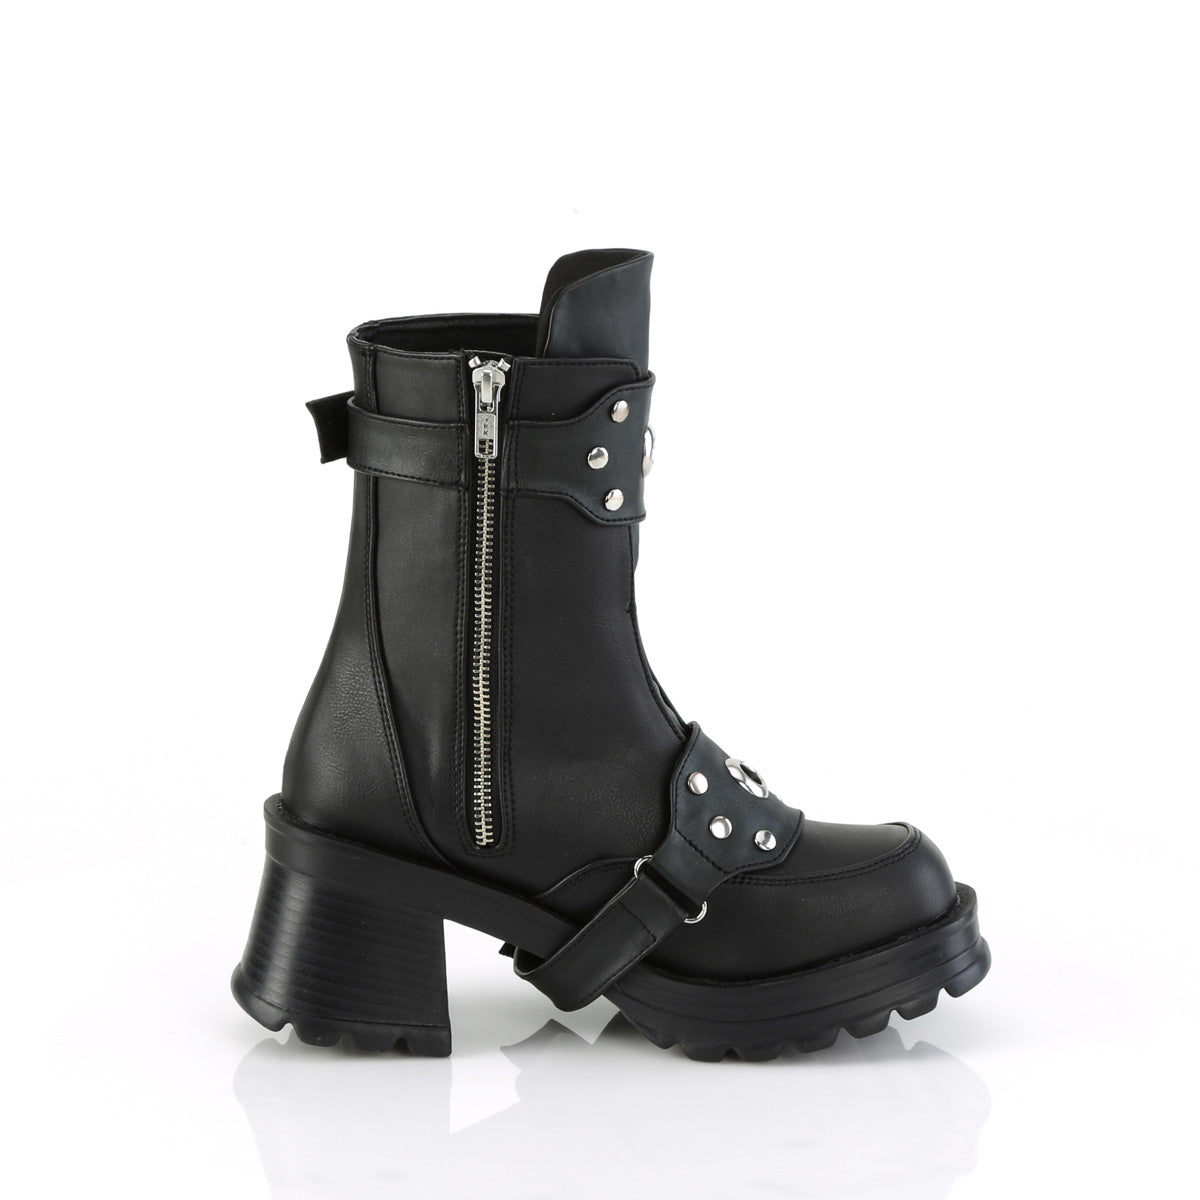 BRATTY-56 Demonia Black Vegan Leather Women's Ankle Boots [Alternative Footwear]